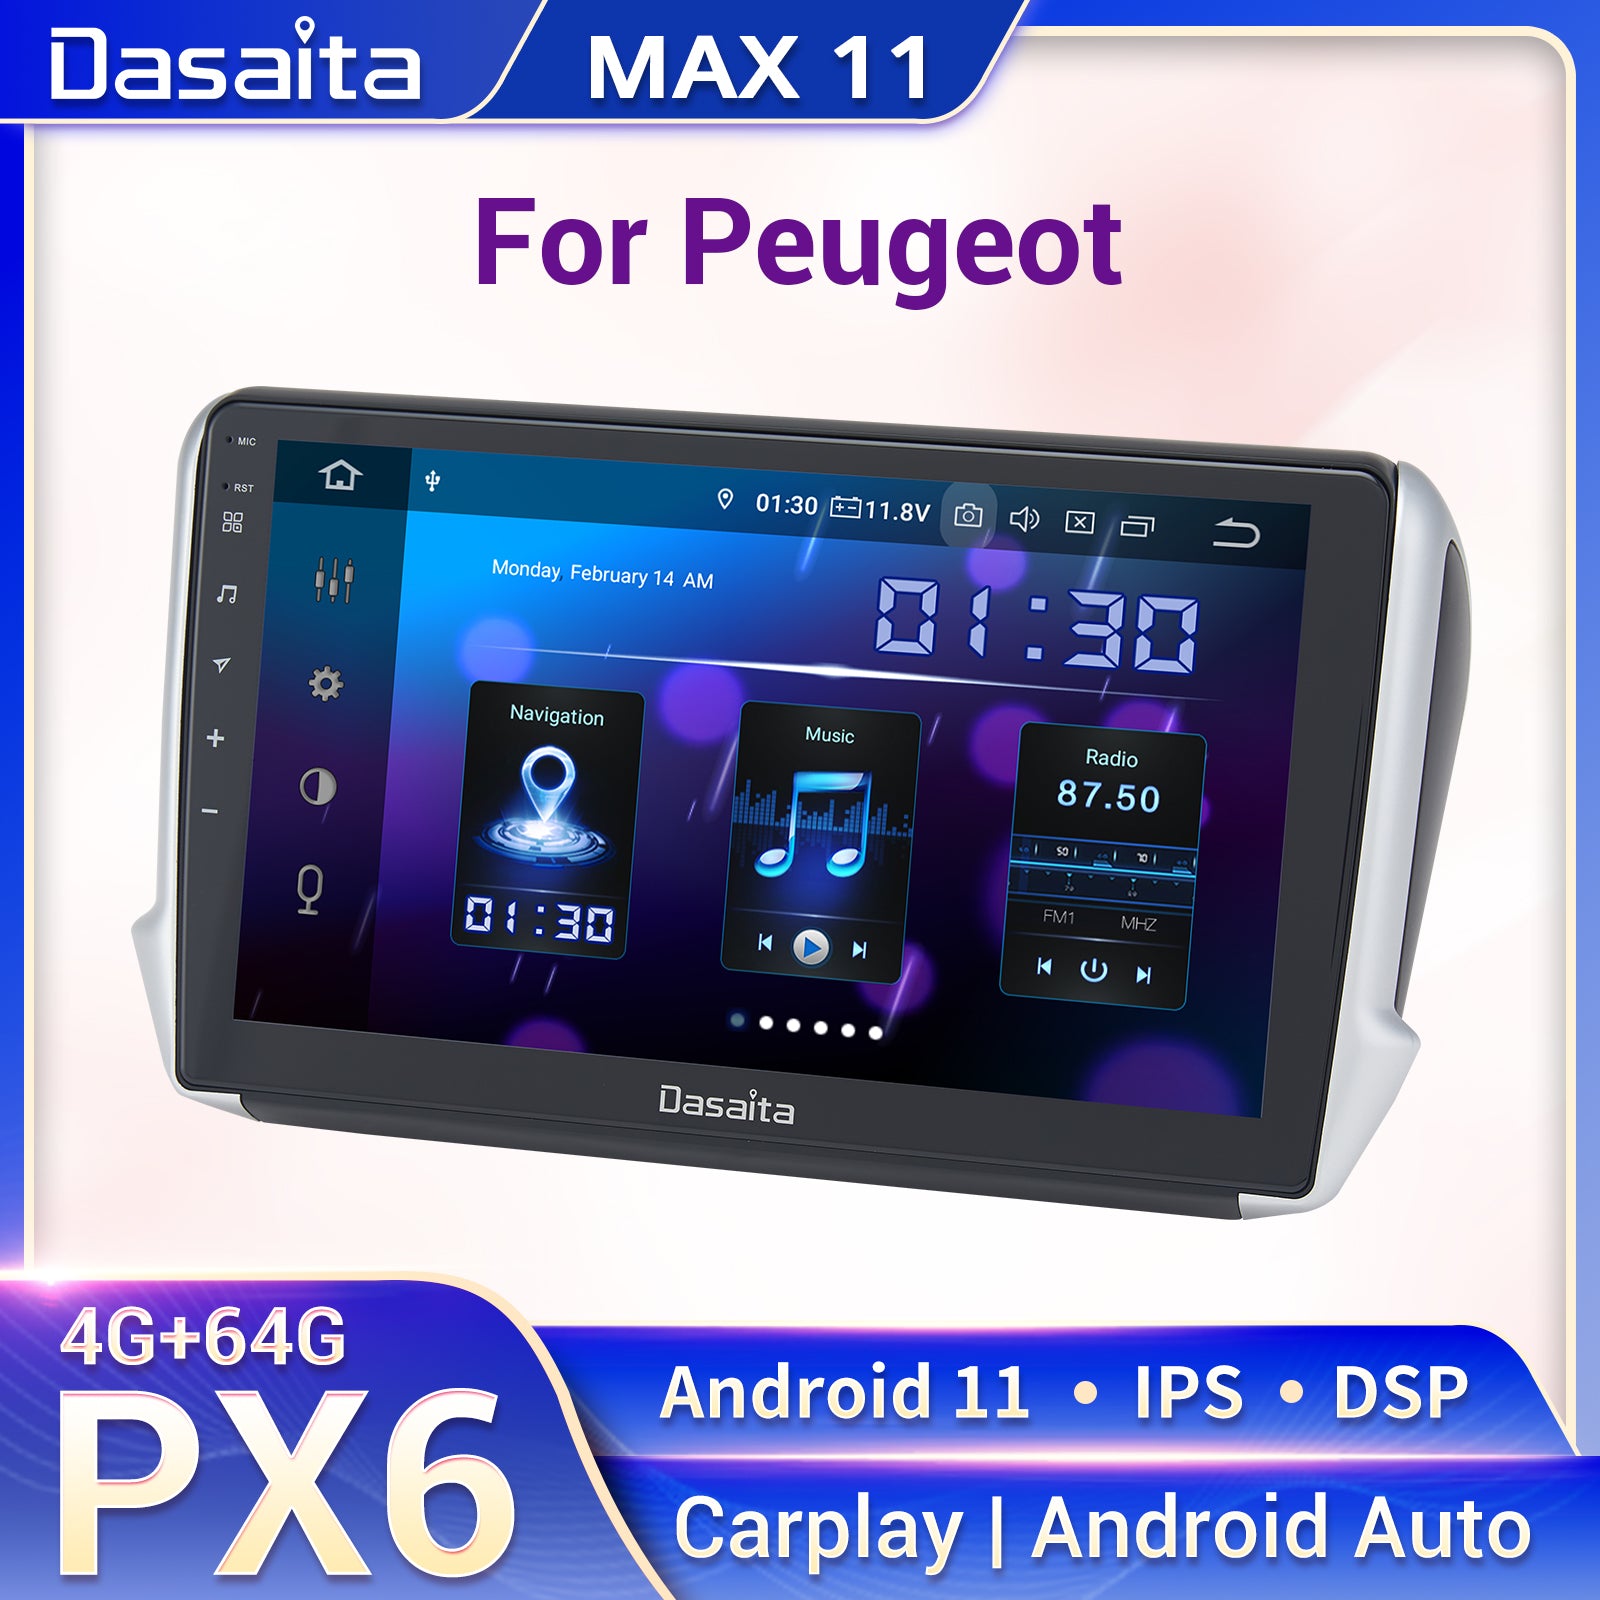 For Peugeot 208 2008 2014-2018 2din Car Radio Stereo Autoradio Multimedia  Player Navigation Gps Android Auto Carplay